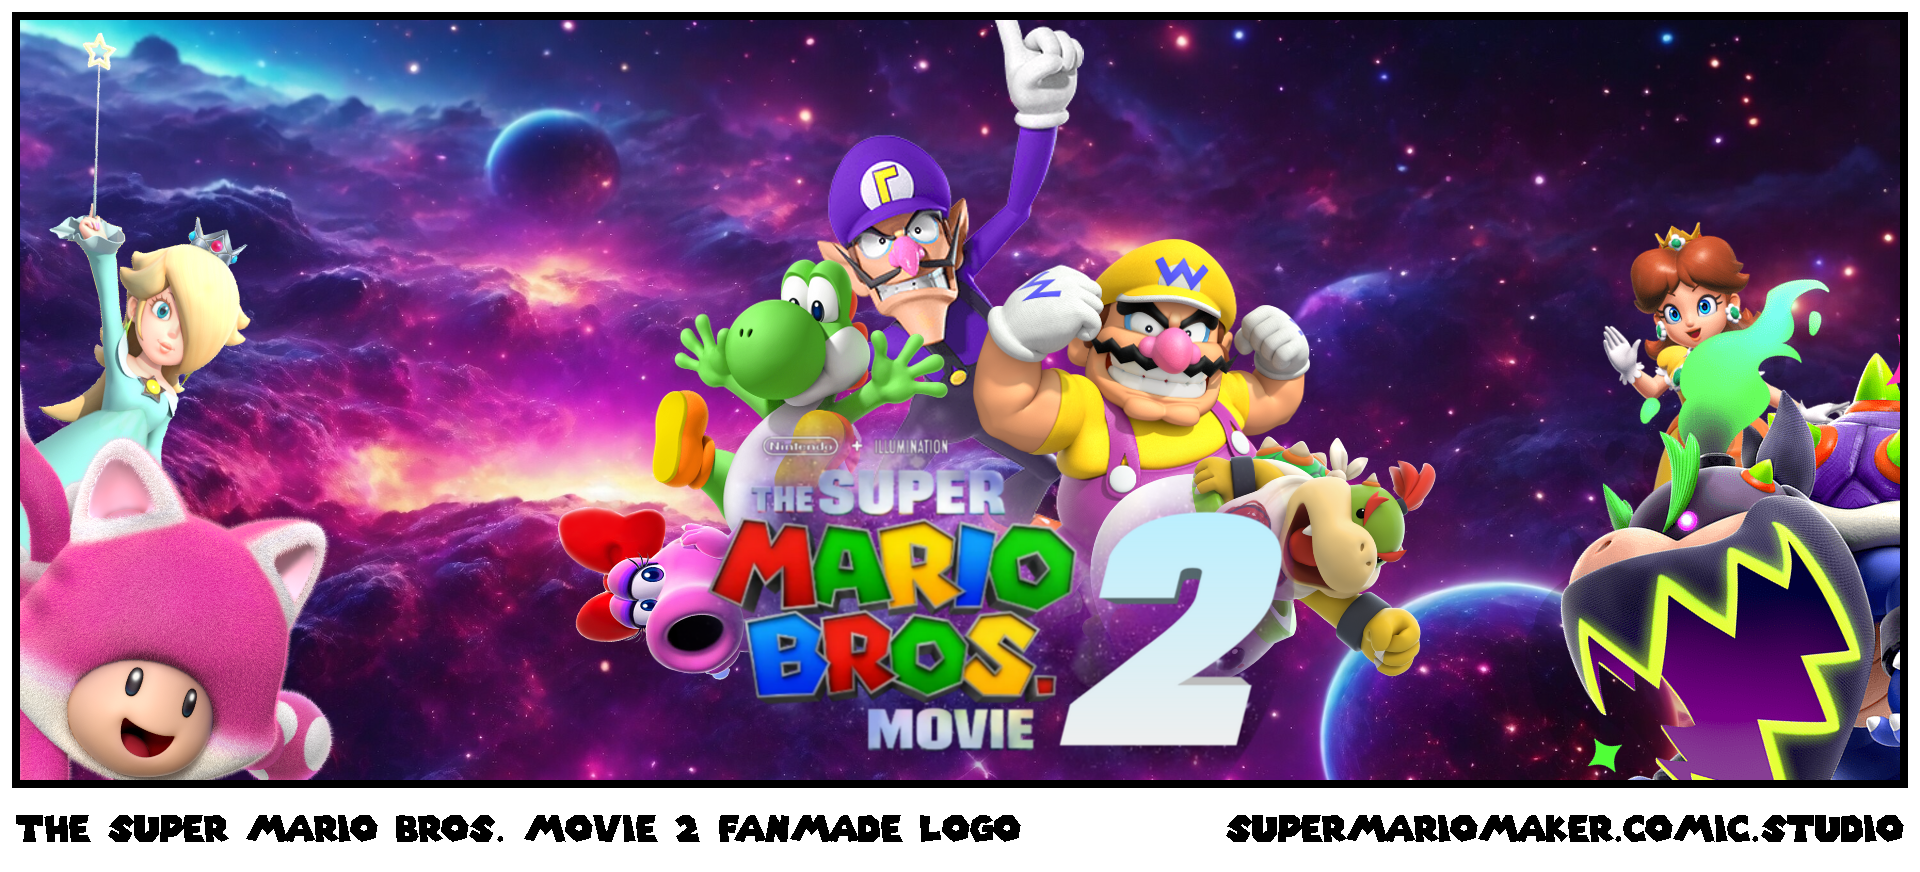 The Super Mario Bros. Movie 2 fanmade logo